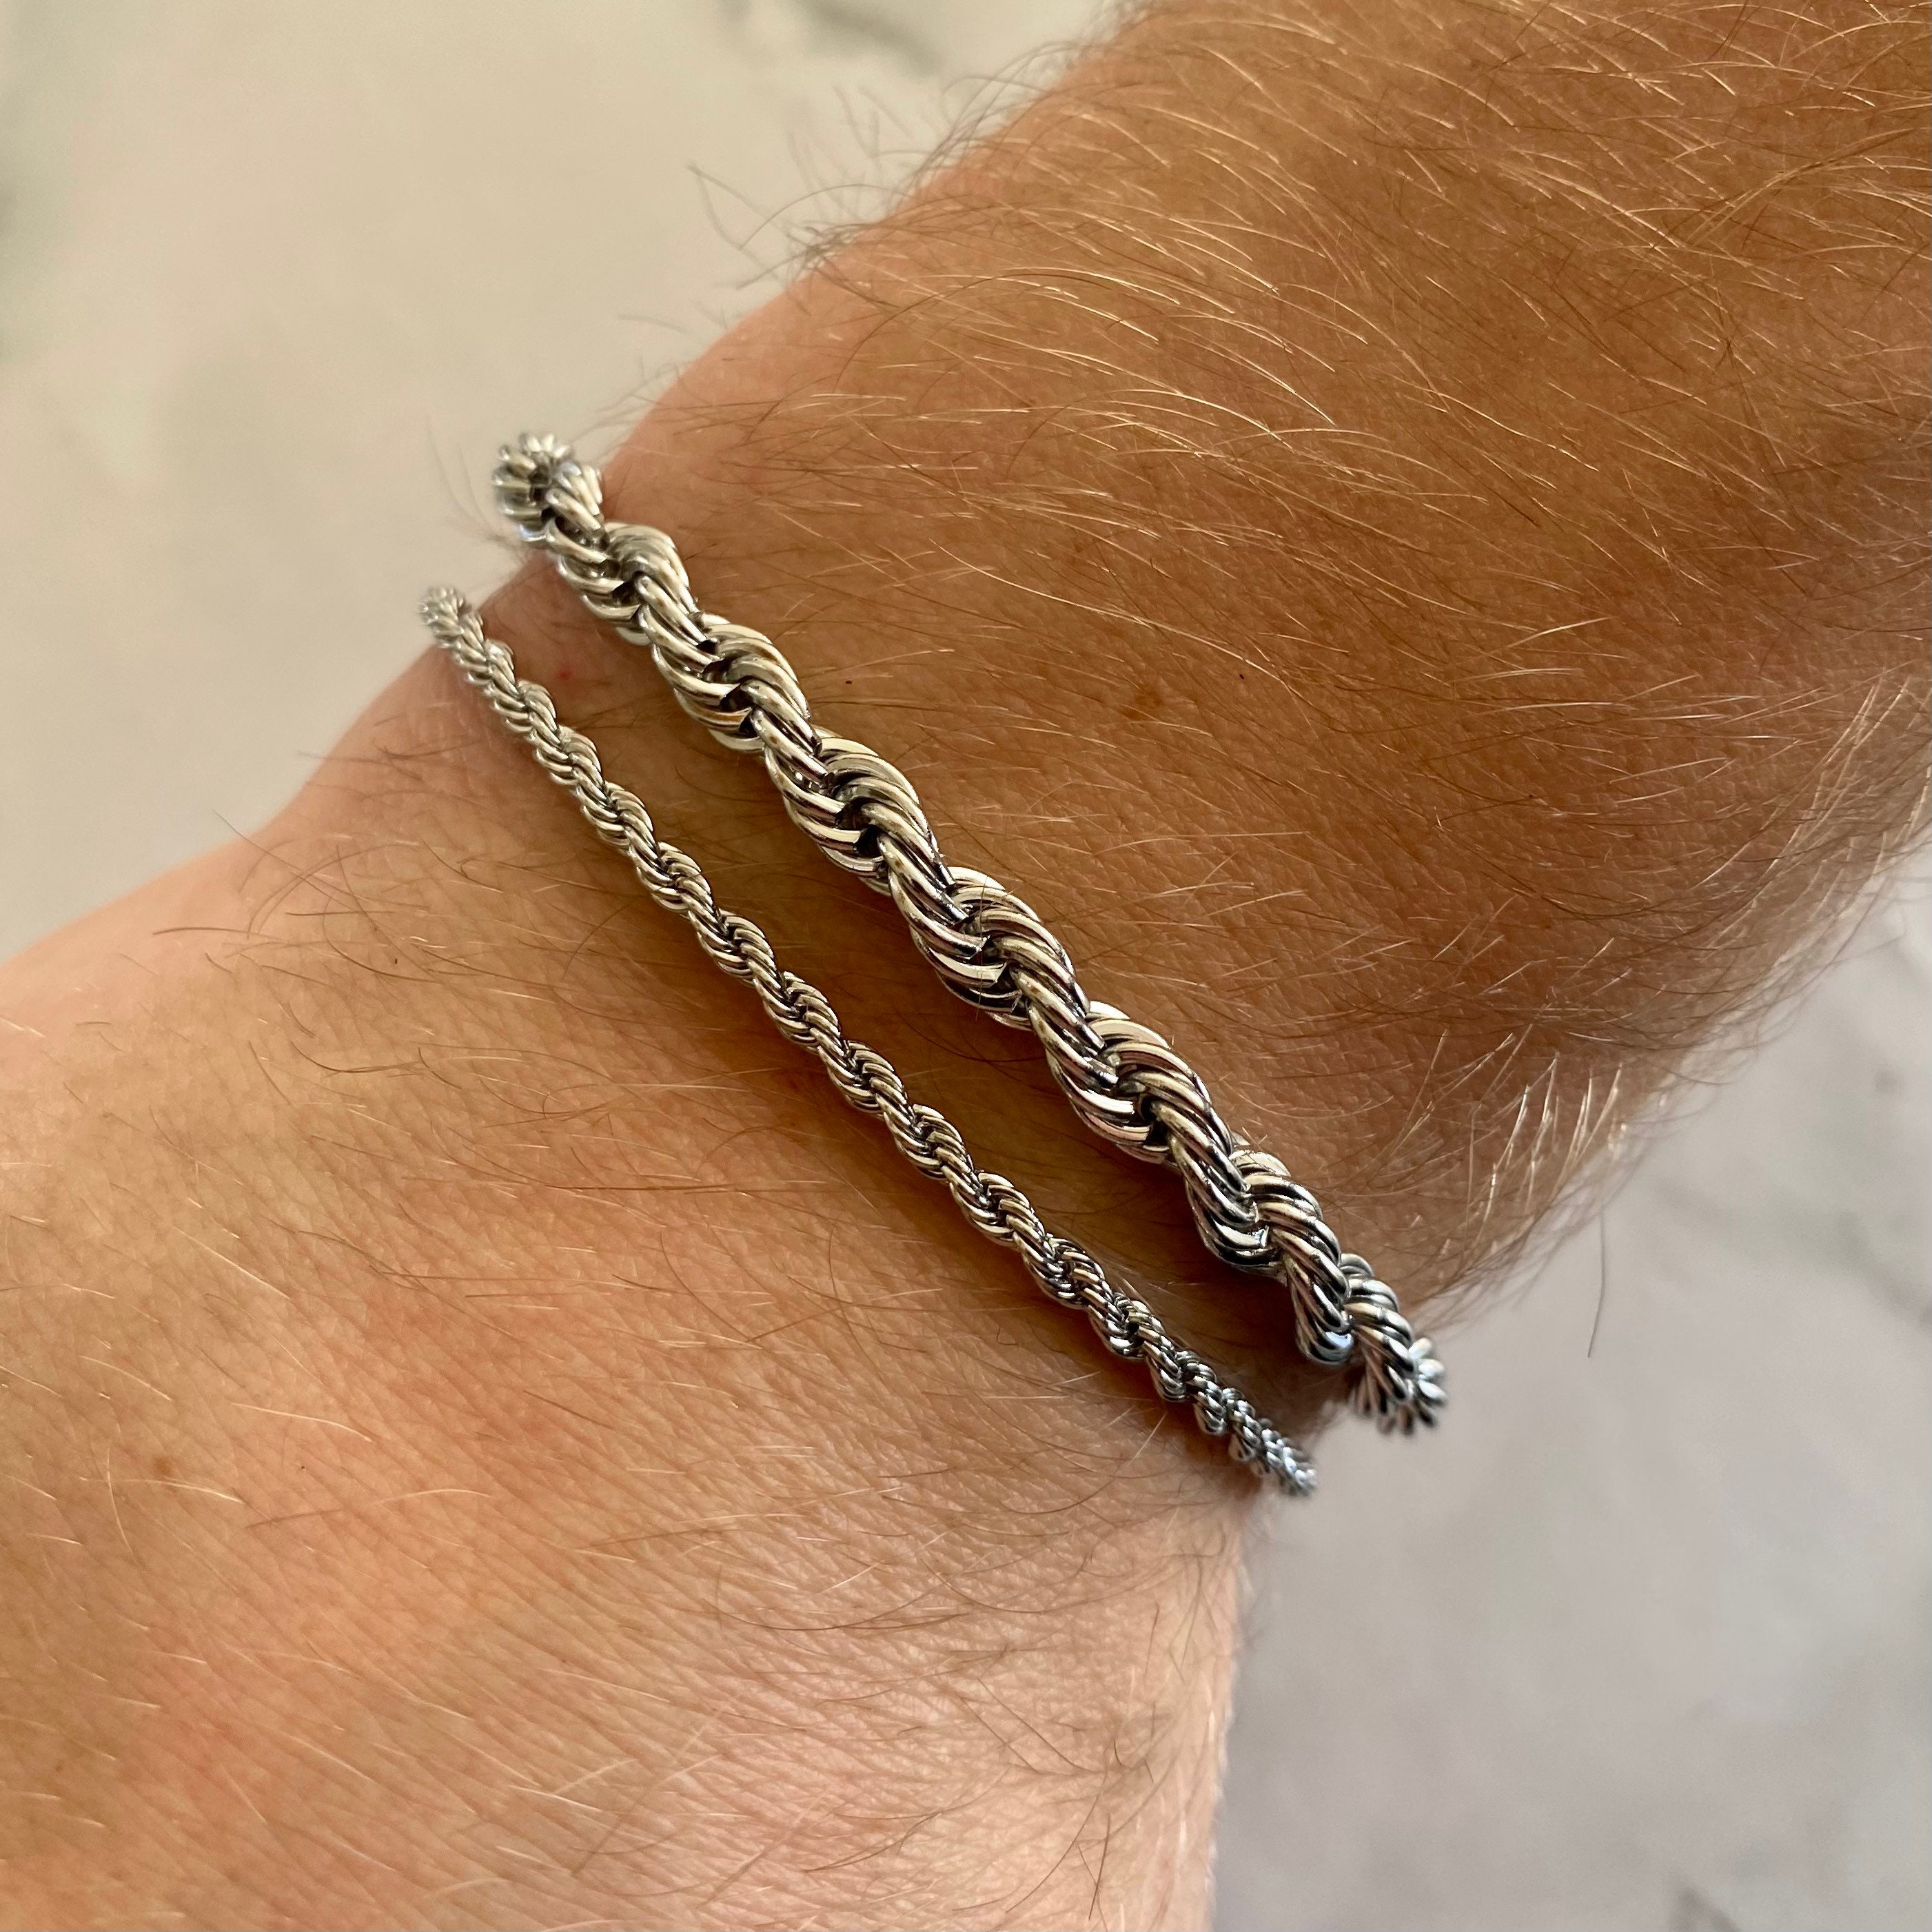 Silver Bracelet Men, Mens Bracelet Chain Rope Link - Mens Jewelry, Thin Silver Bracelet, Silver Bracelet Chains for Man - By Twistedpendant